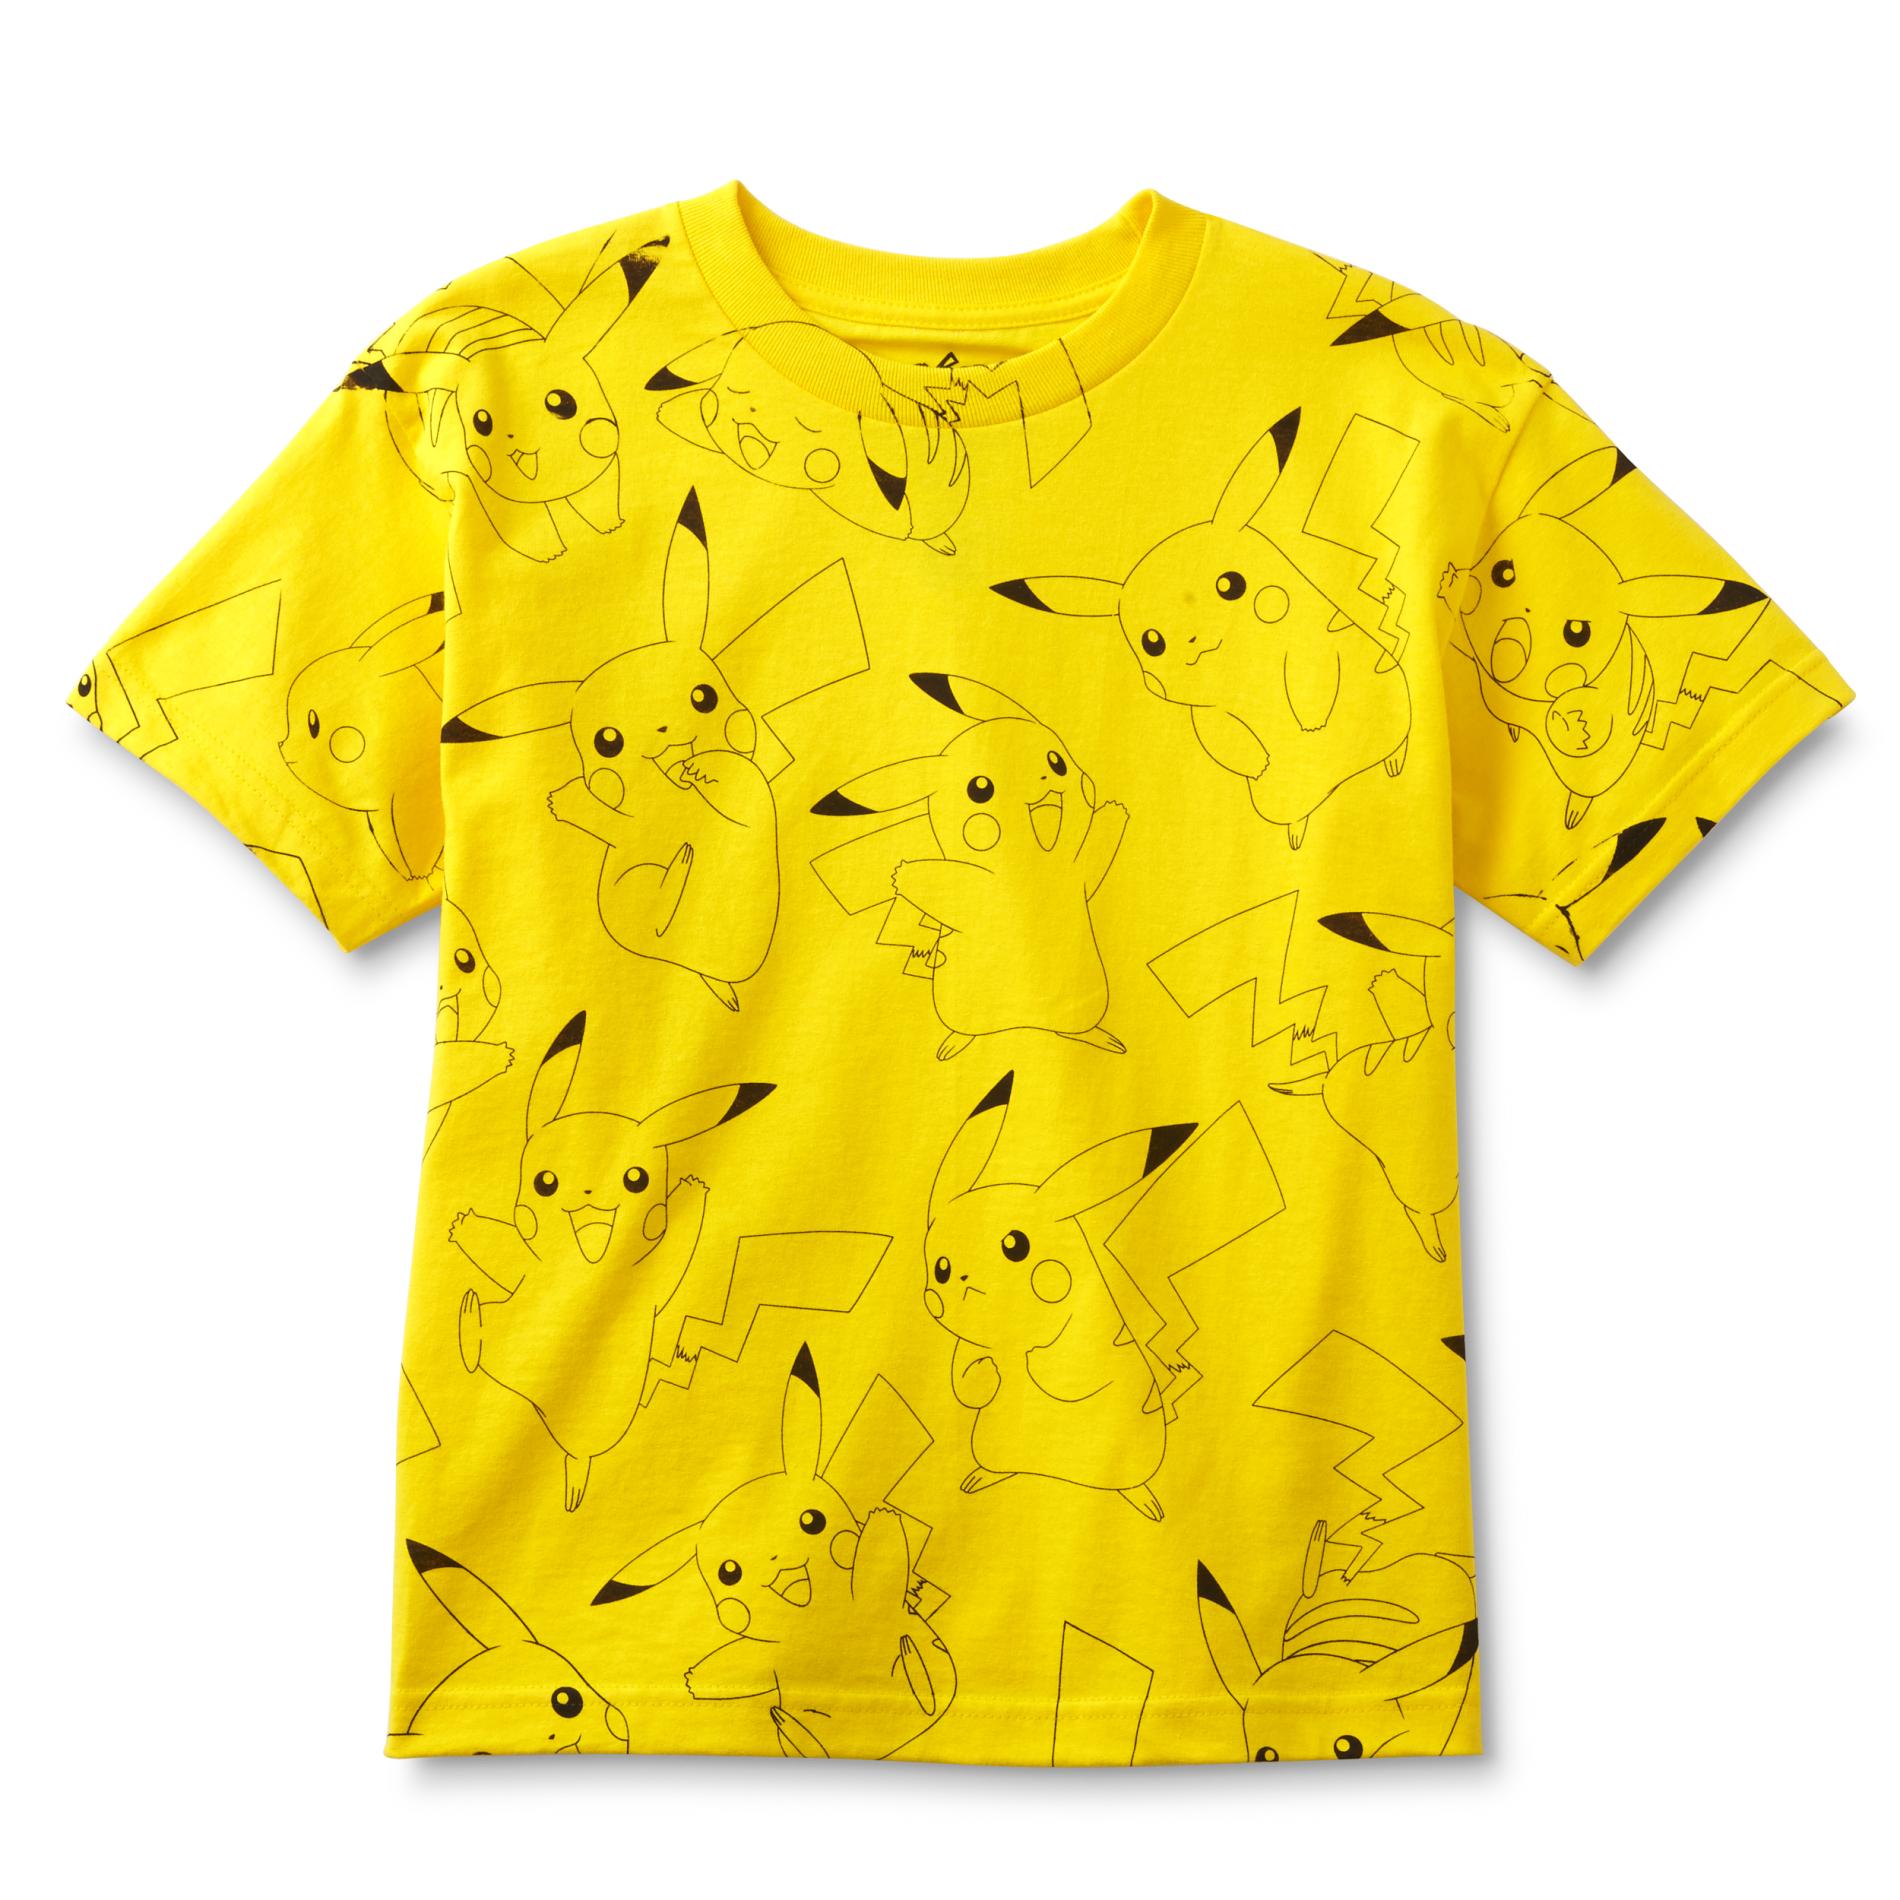 Nintendo Pokemon Boy's T-Shirt - Pikachu